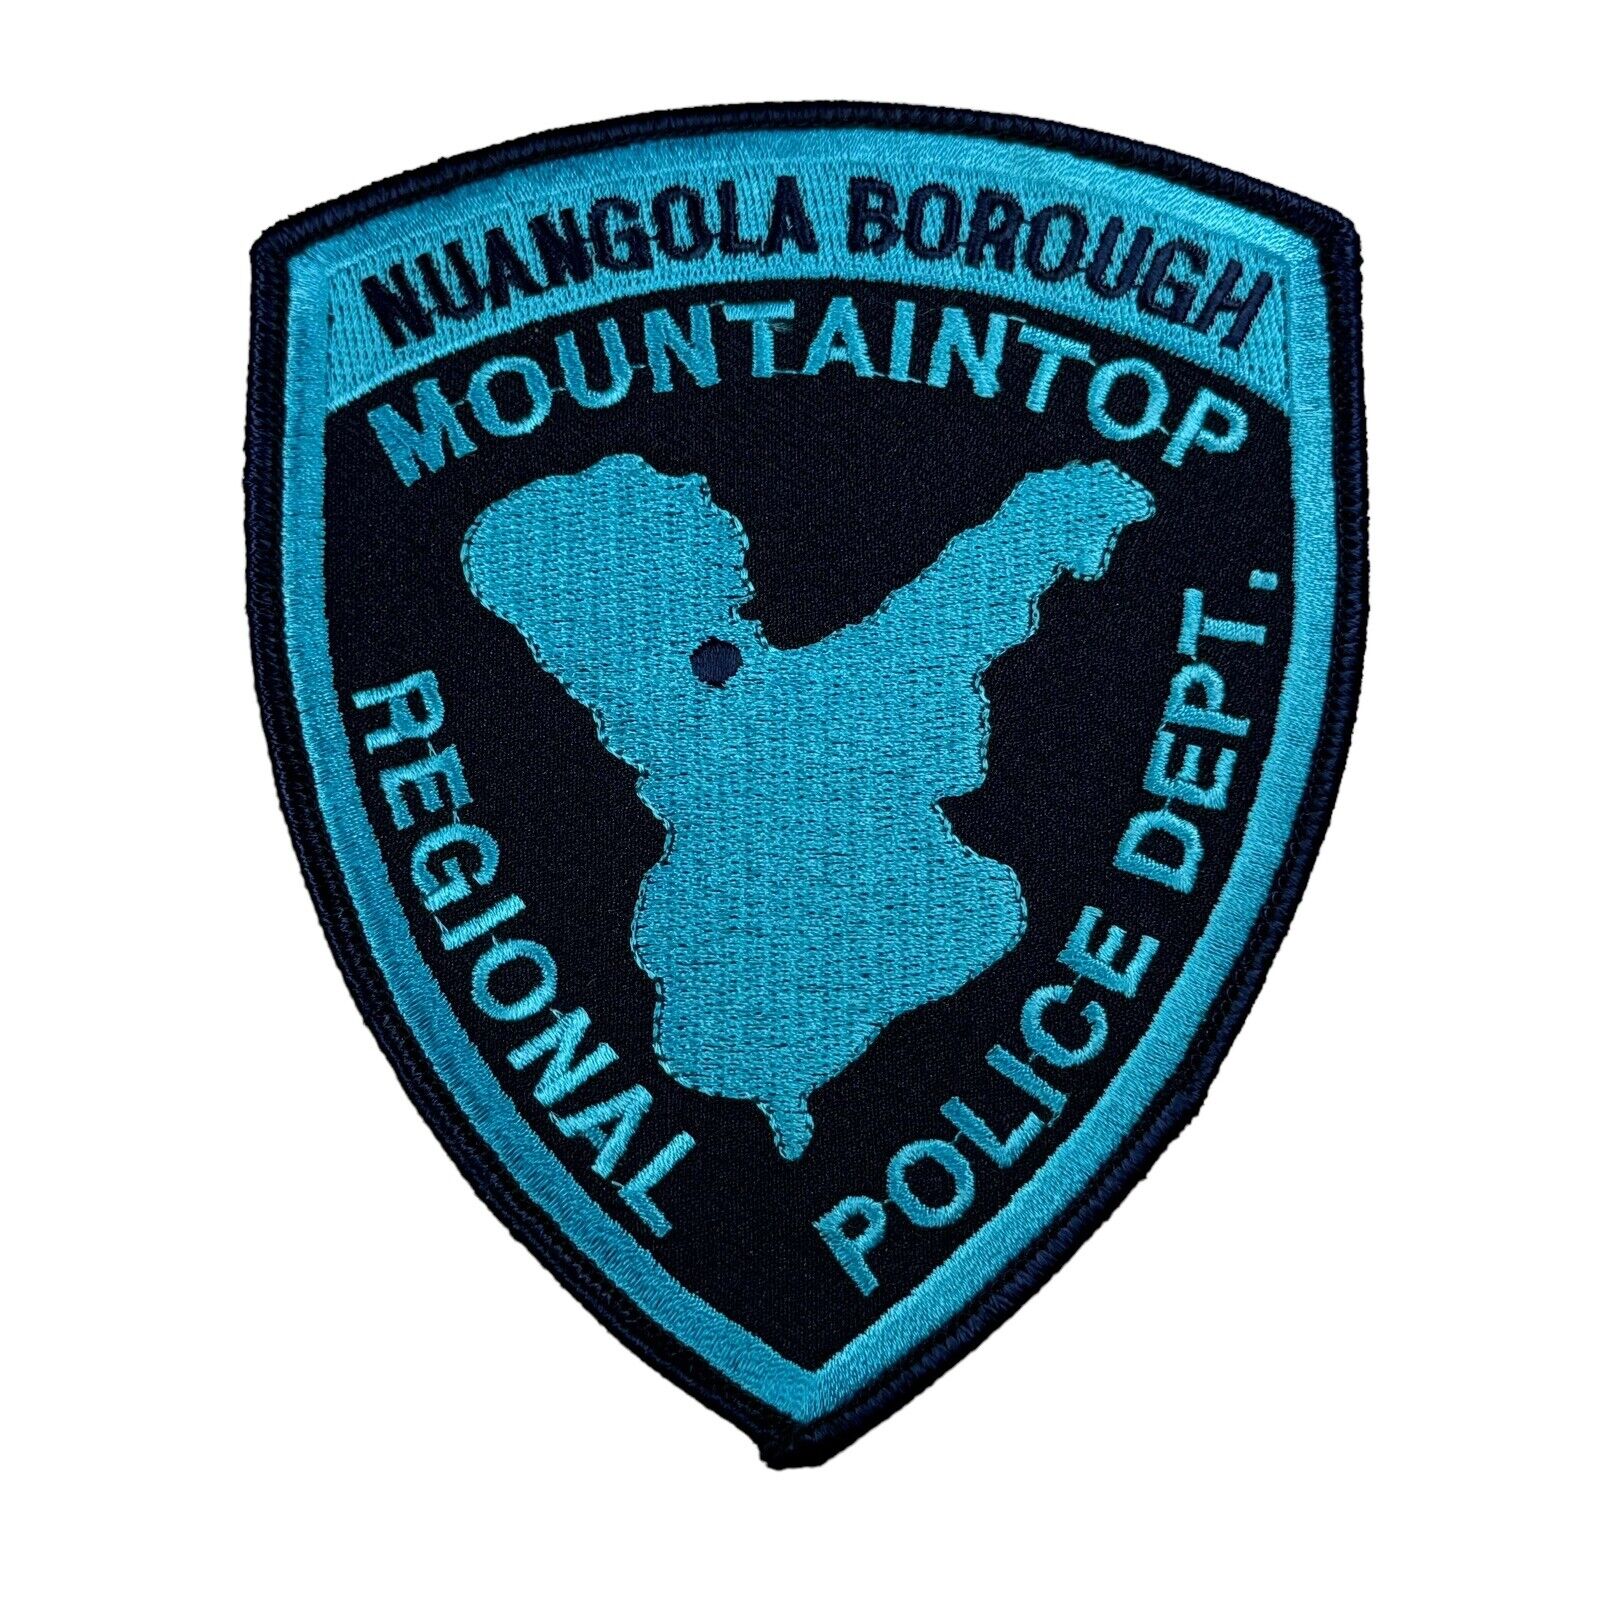 Nuangola Boro Mountaintop PA, Luzerne County Pennsylvania Police Shoulder Patch